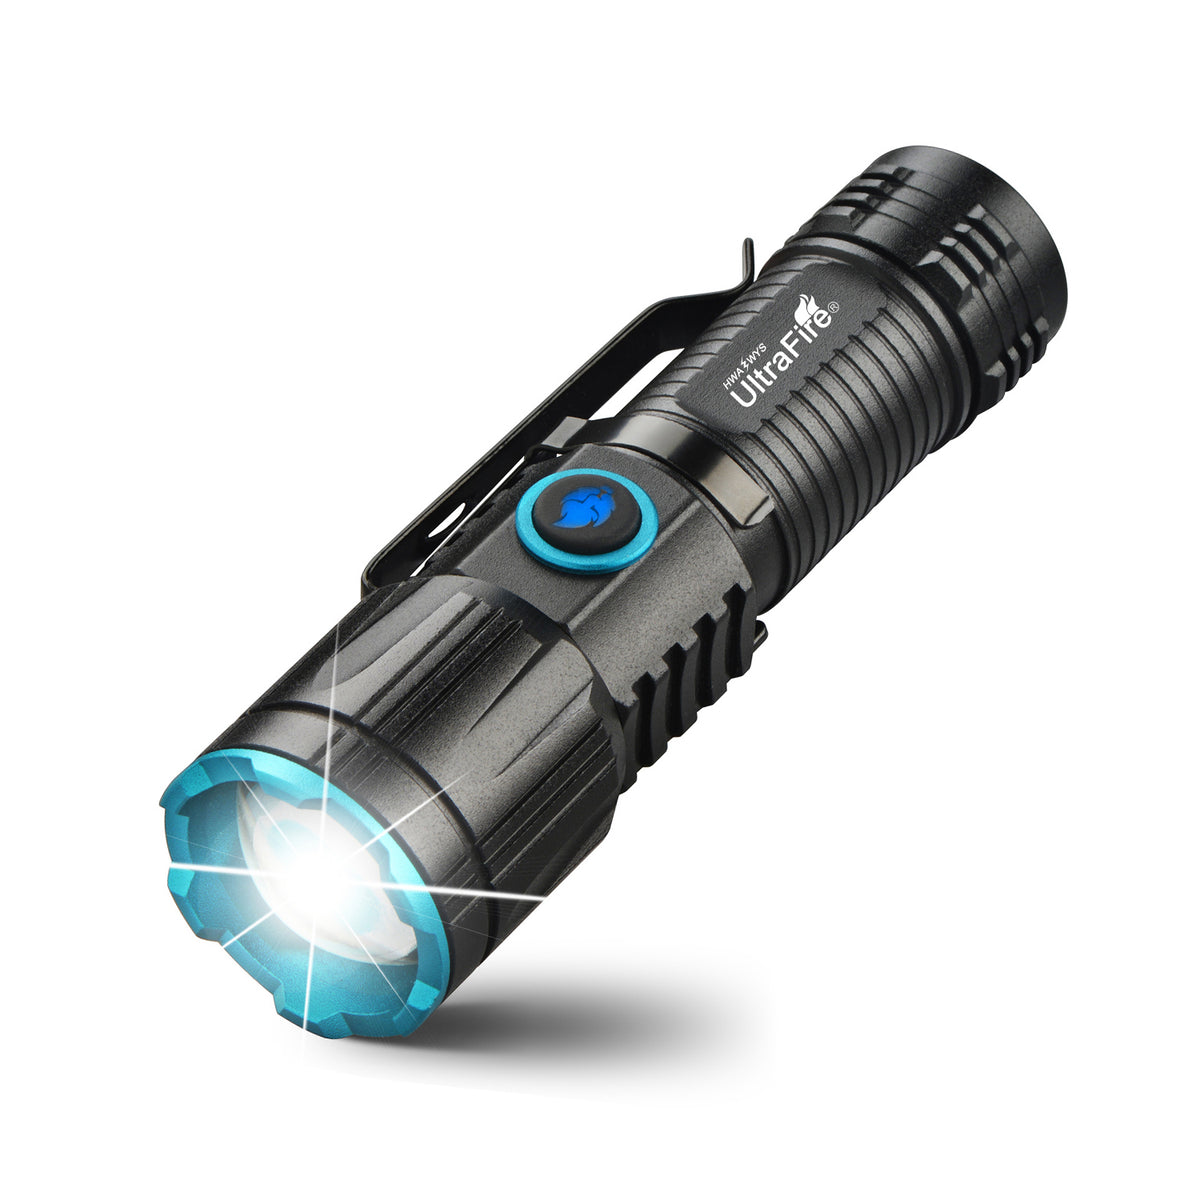 UltraFire MINI 10W Compact Rechargeable EDC Flashlight